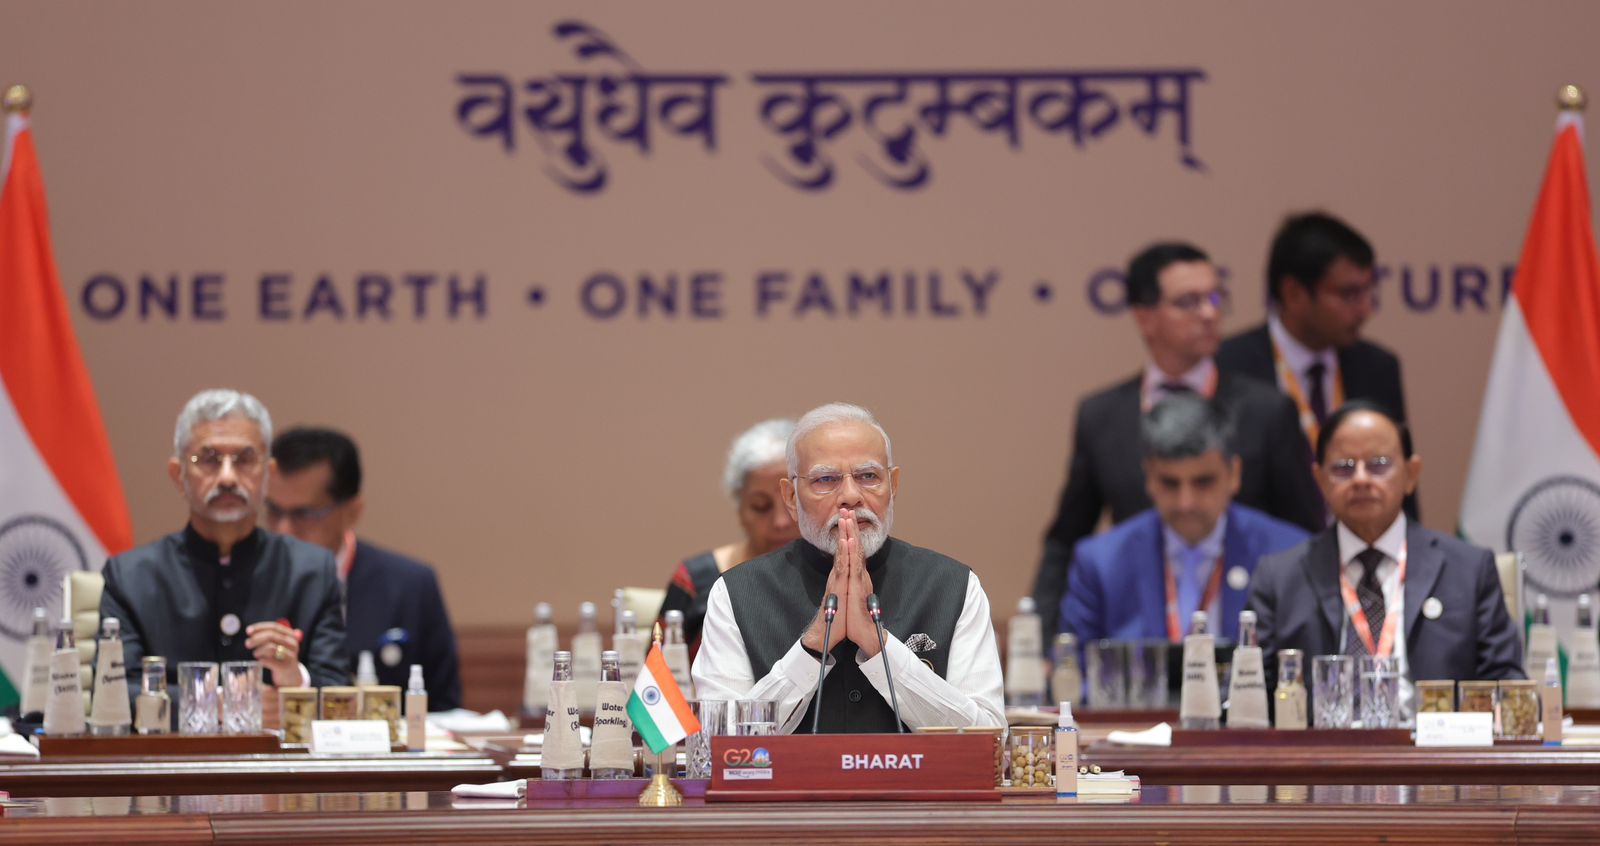 Consensus on New Delhi G20 Leaders’ Summit Declaration reached: PM Modi